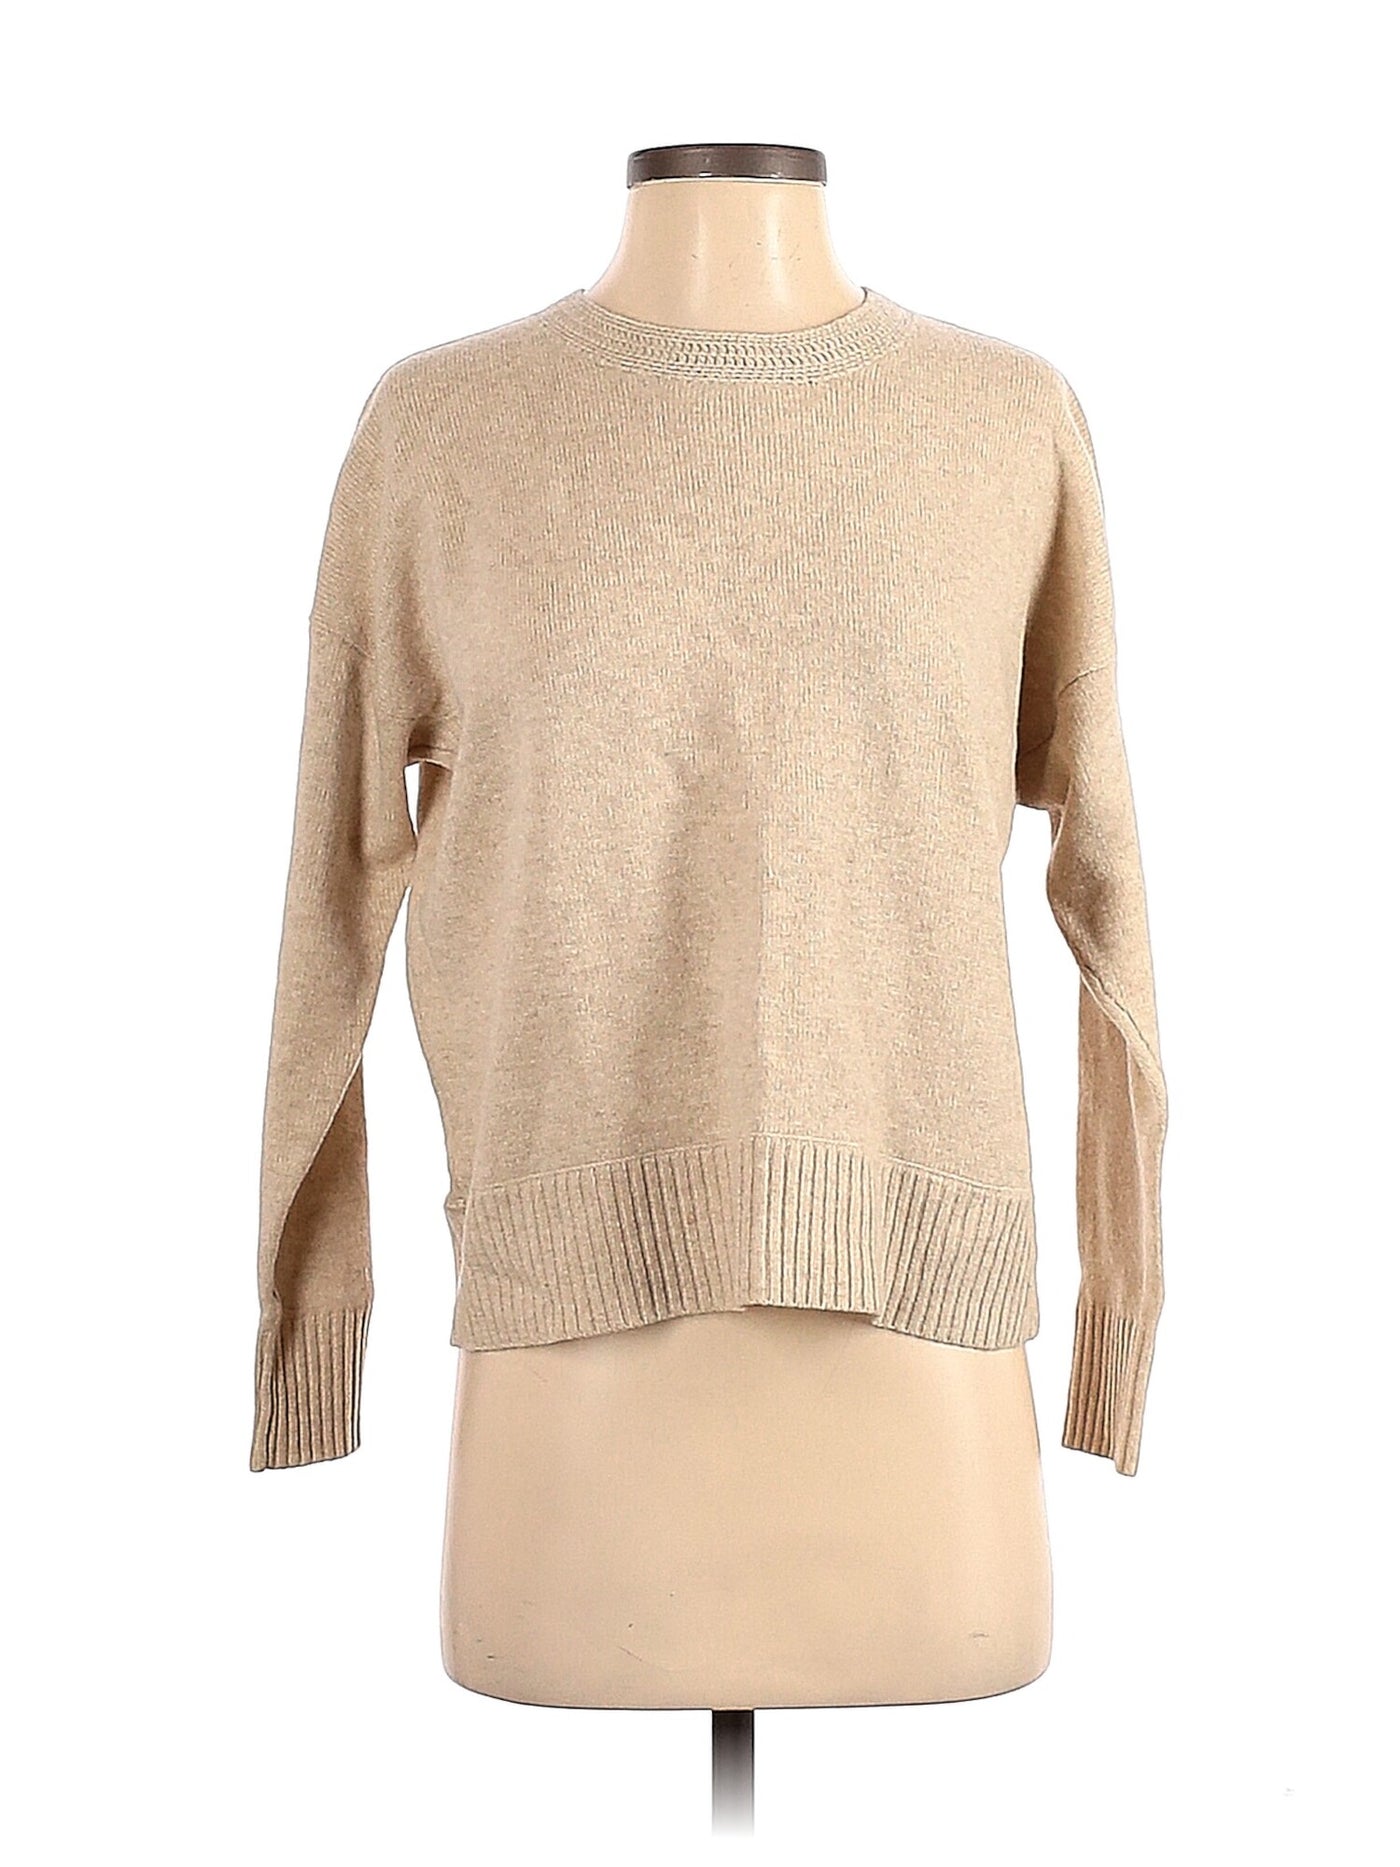 Designer Brand Womens Beige Long Sleeve Crew Neck Hi-Lo Sweater XL